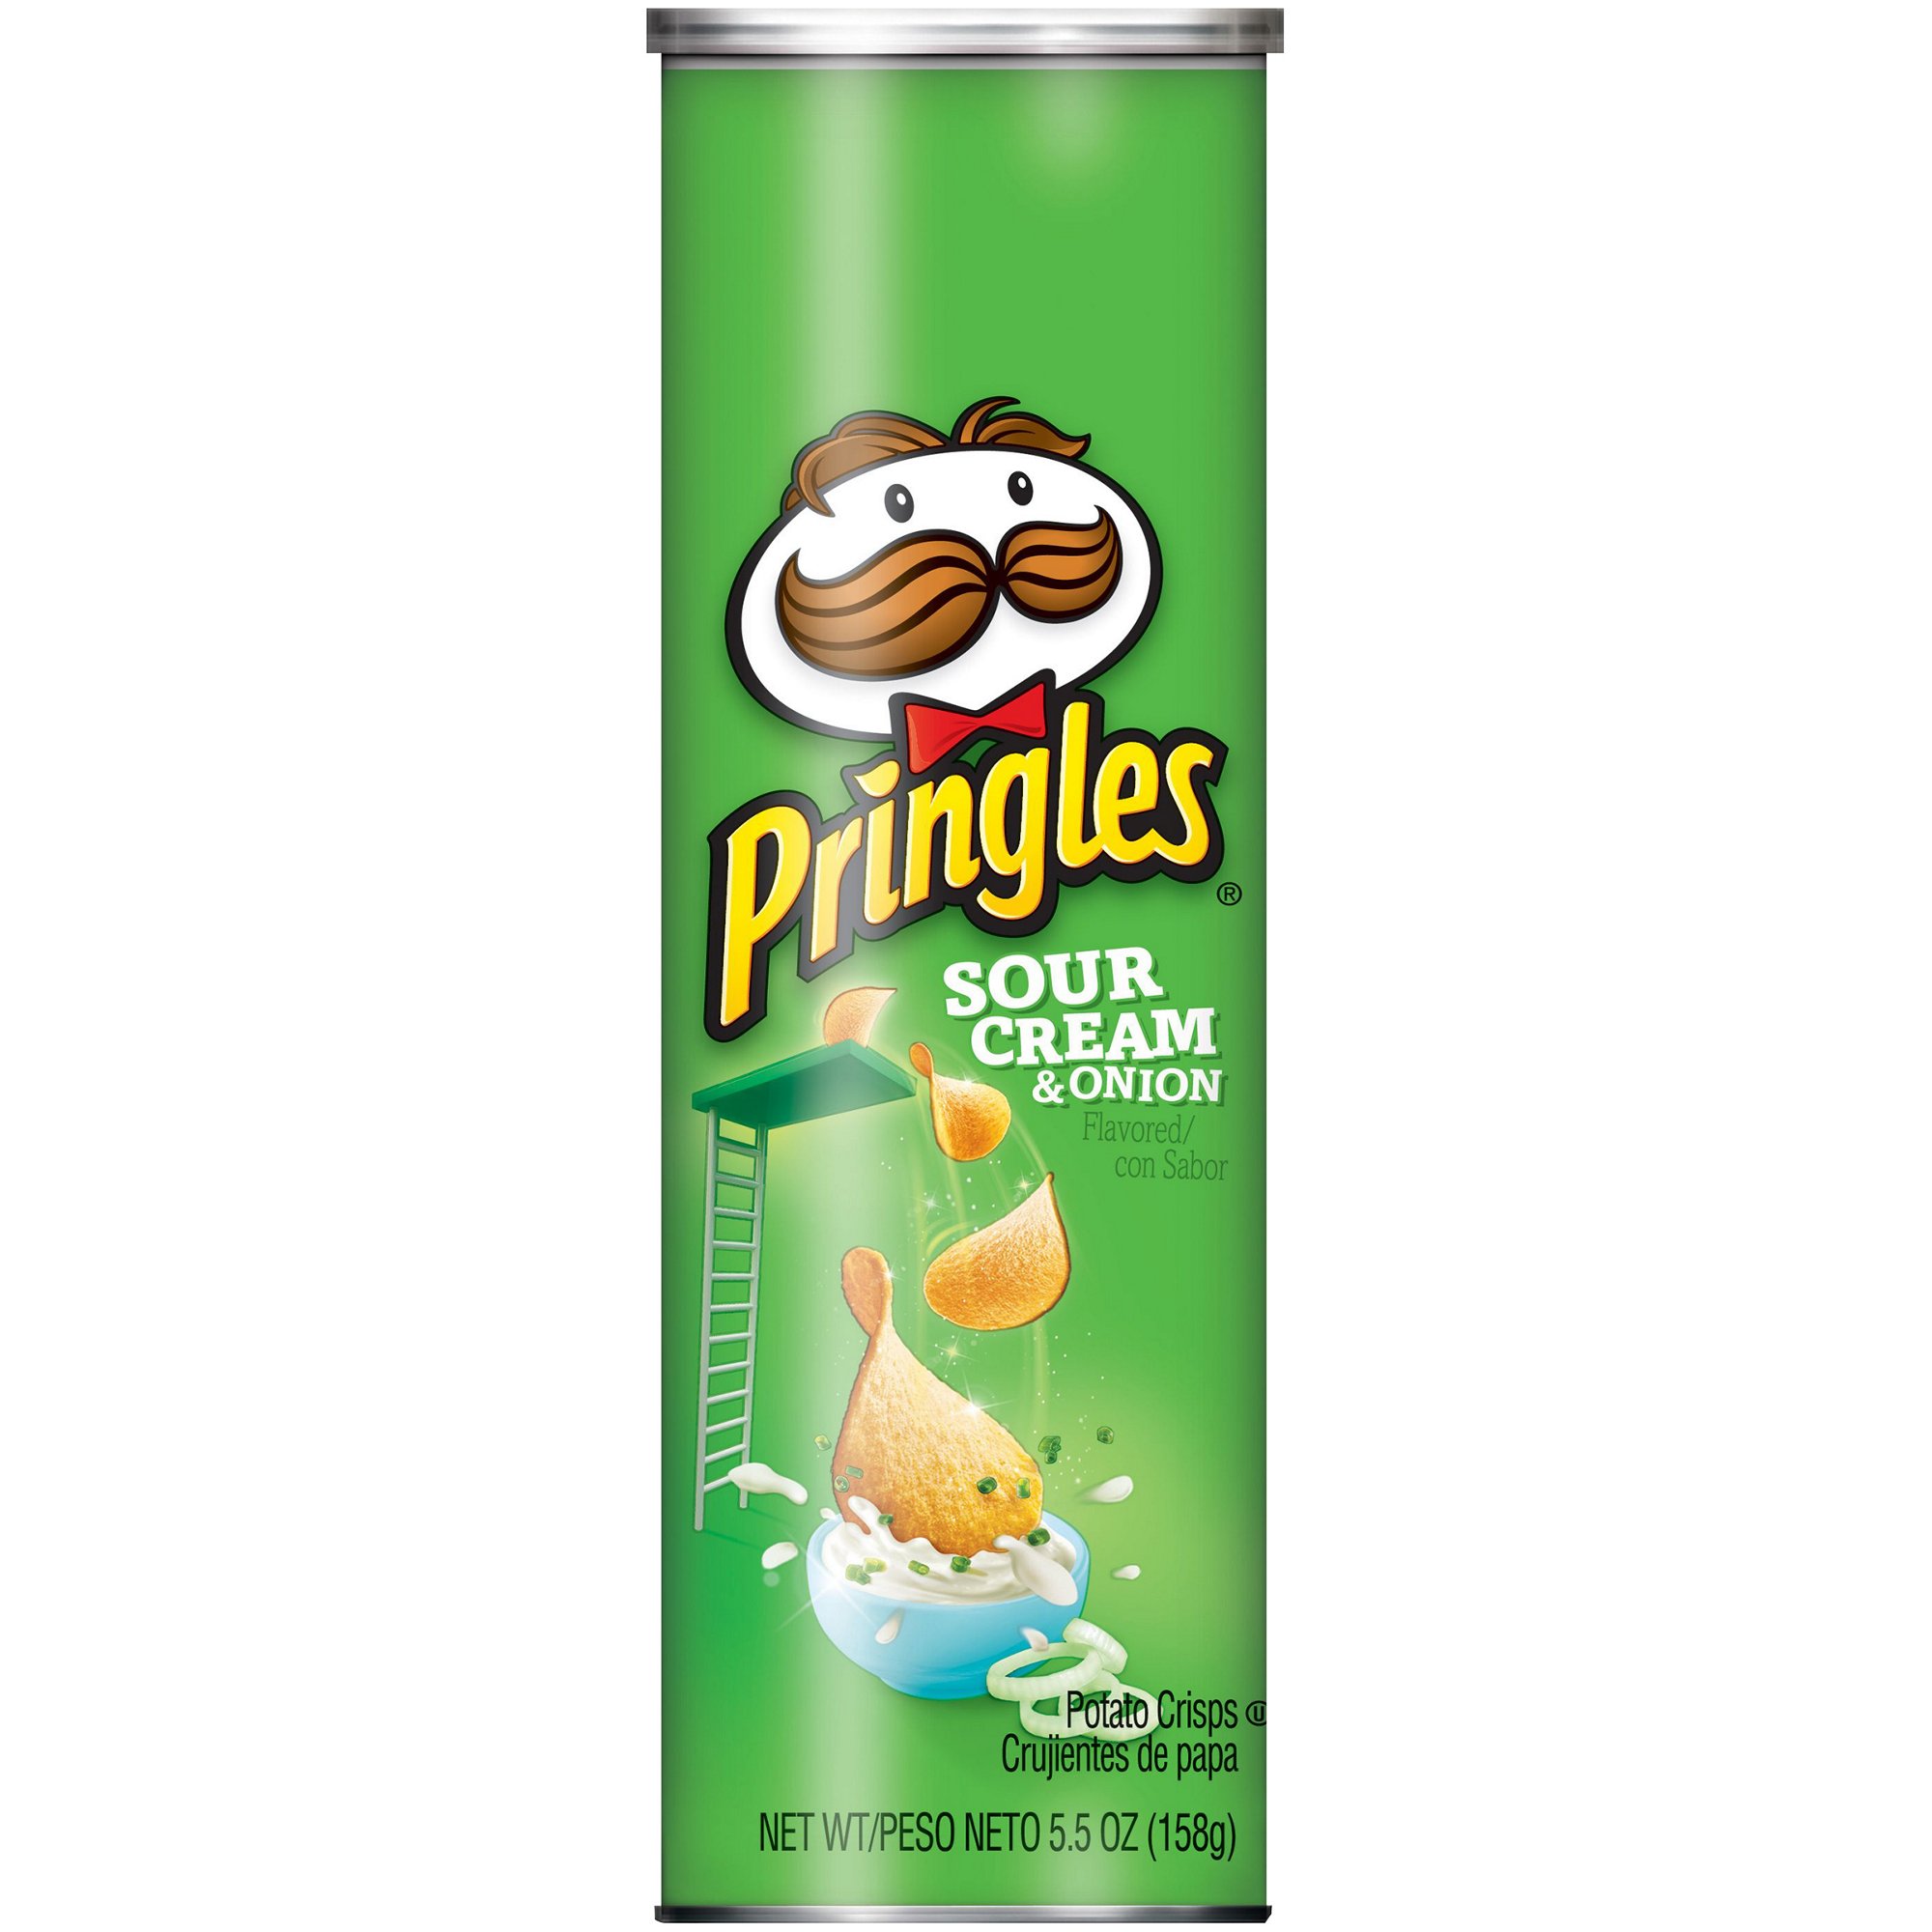 Pringles Sour Cream & Onion 5.2 oz